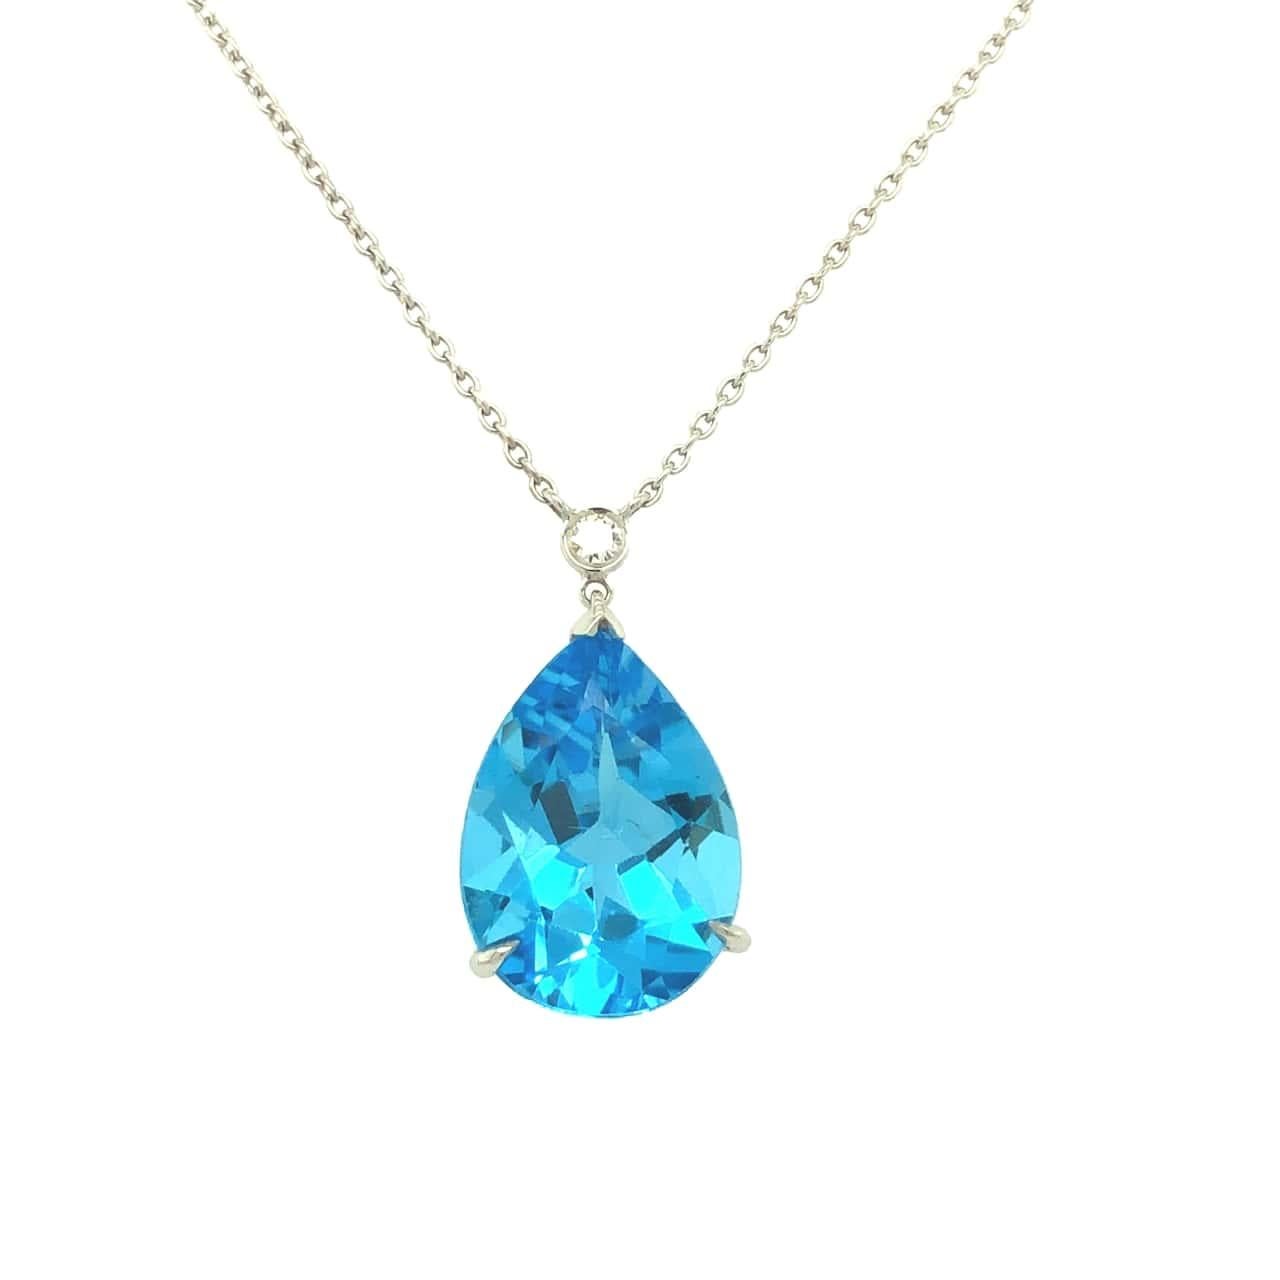 Pear Cut Gems Are Forever 8.87 carat Pear Shape Blue Topaz & Diamond Pendant Necklace 14K For Sale